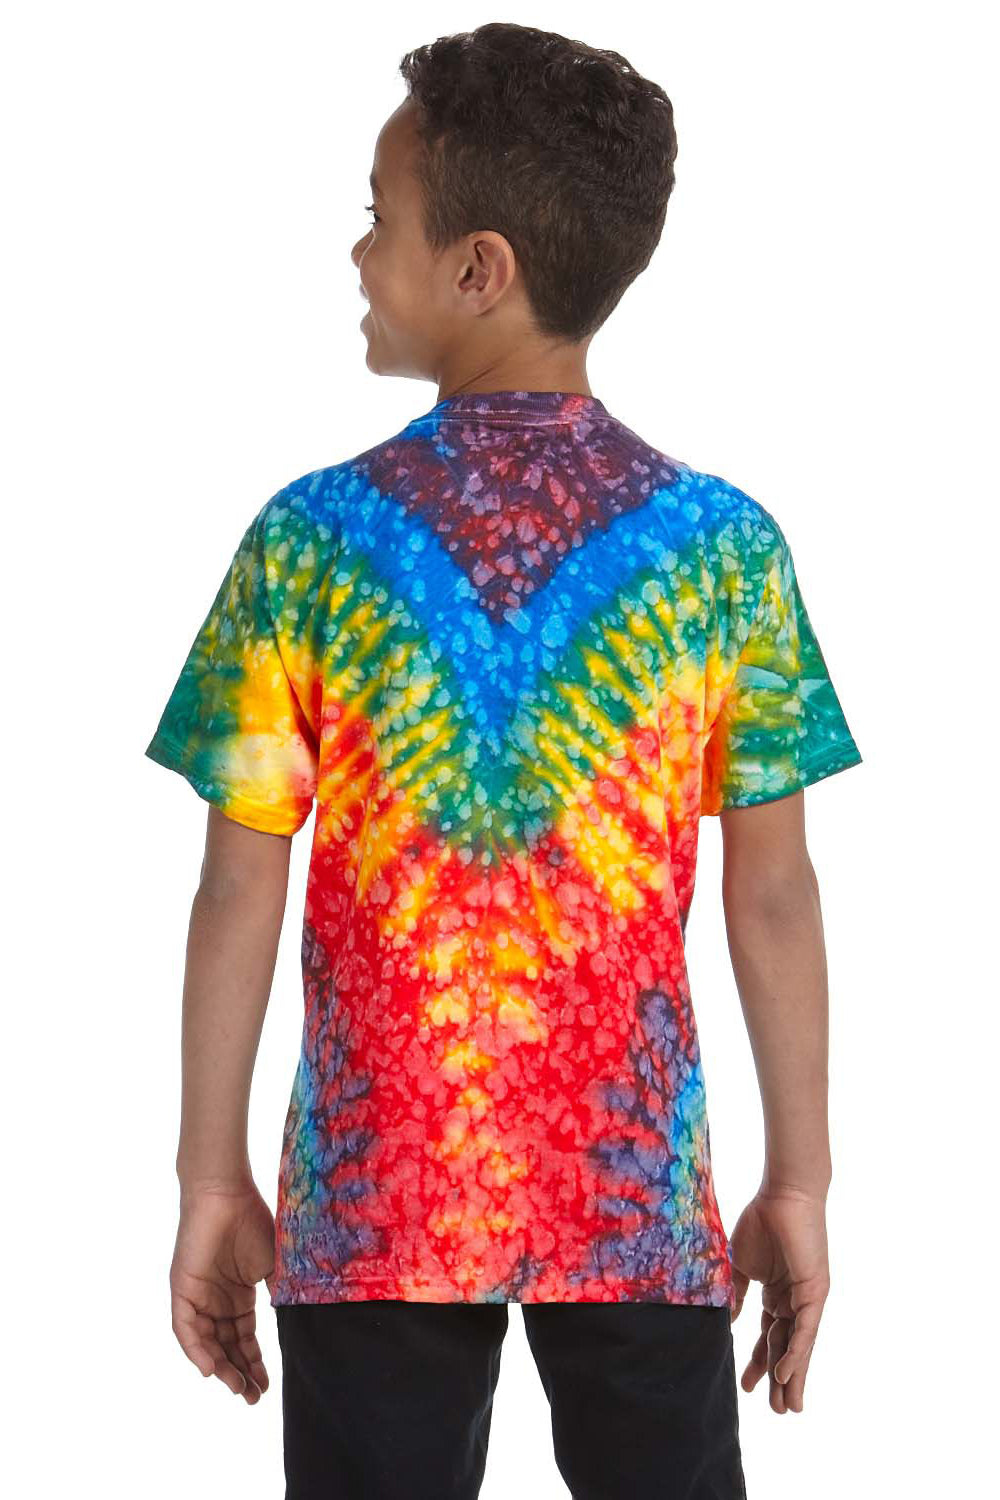 Tie-Dye CD100Y Youth Short Sleeve Crewneck T-Shirt Woodstock Back